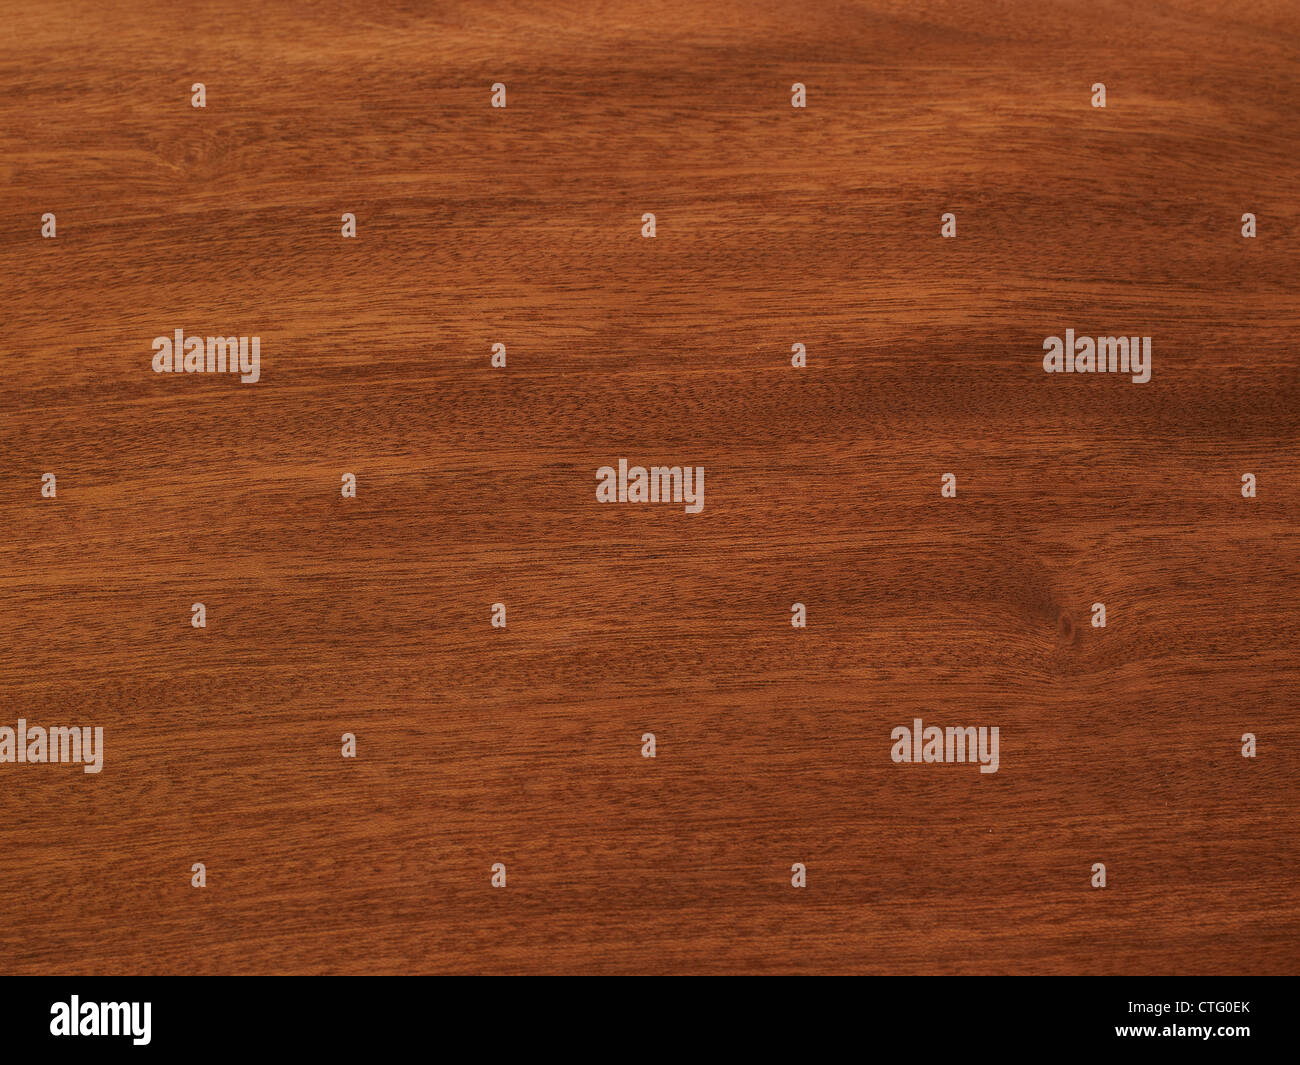 Wood grain table background Stock Photo - Alamy